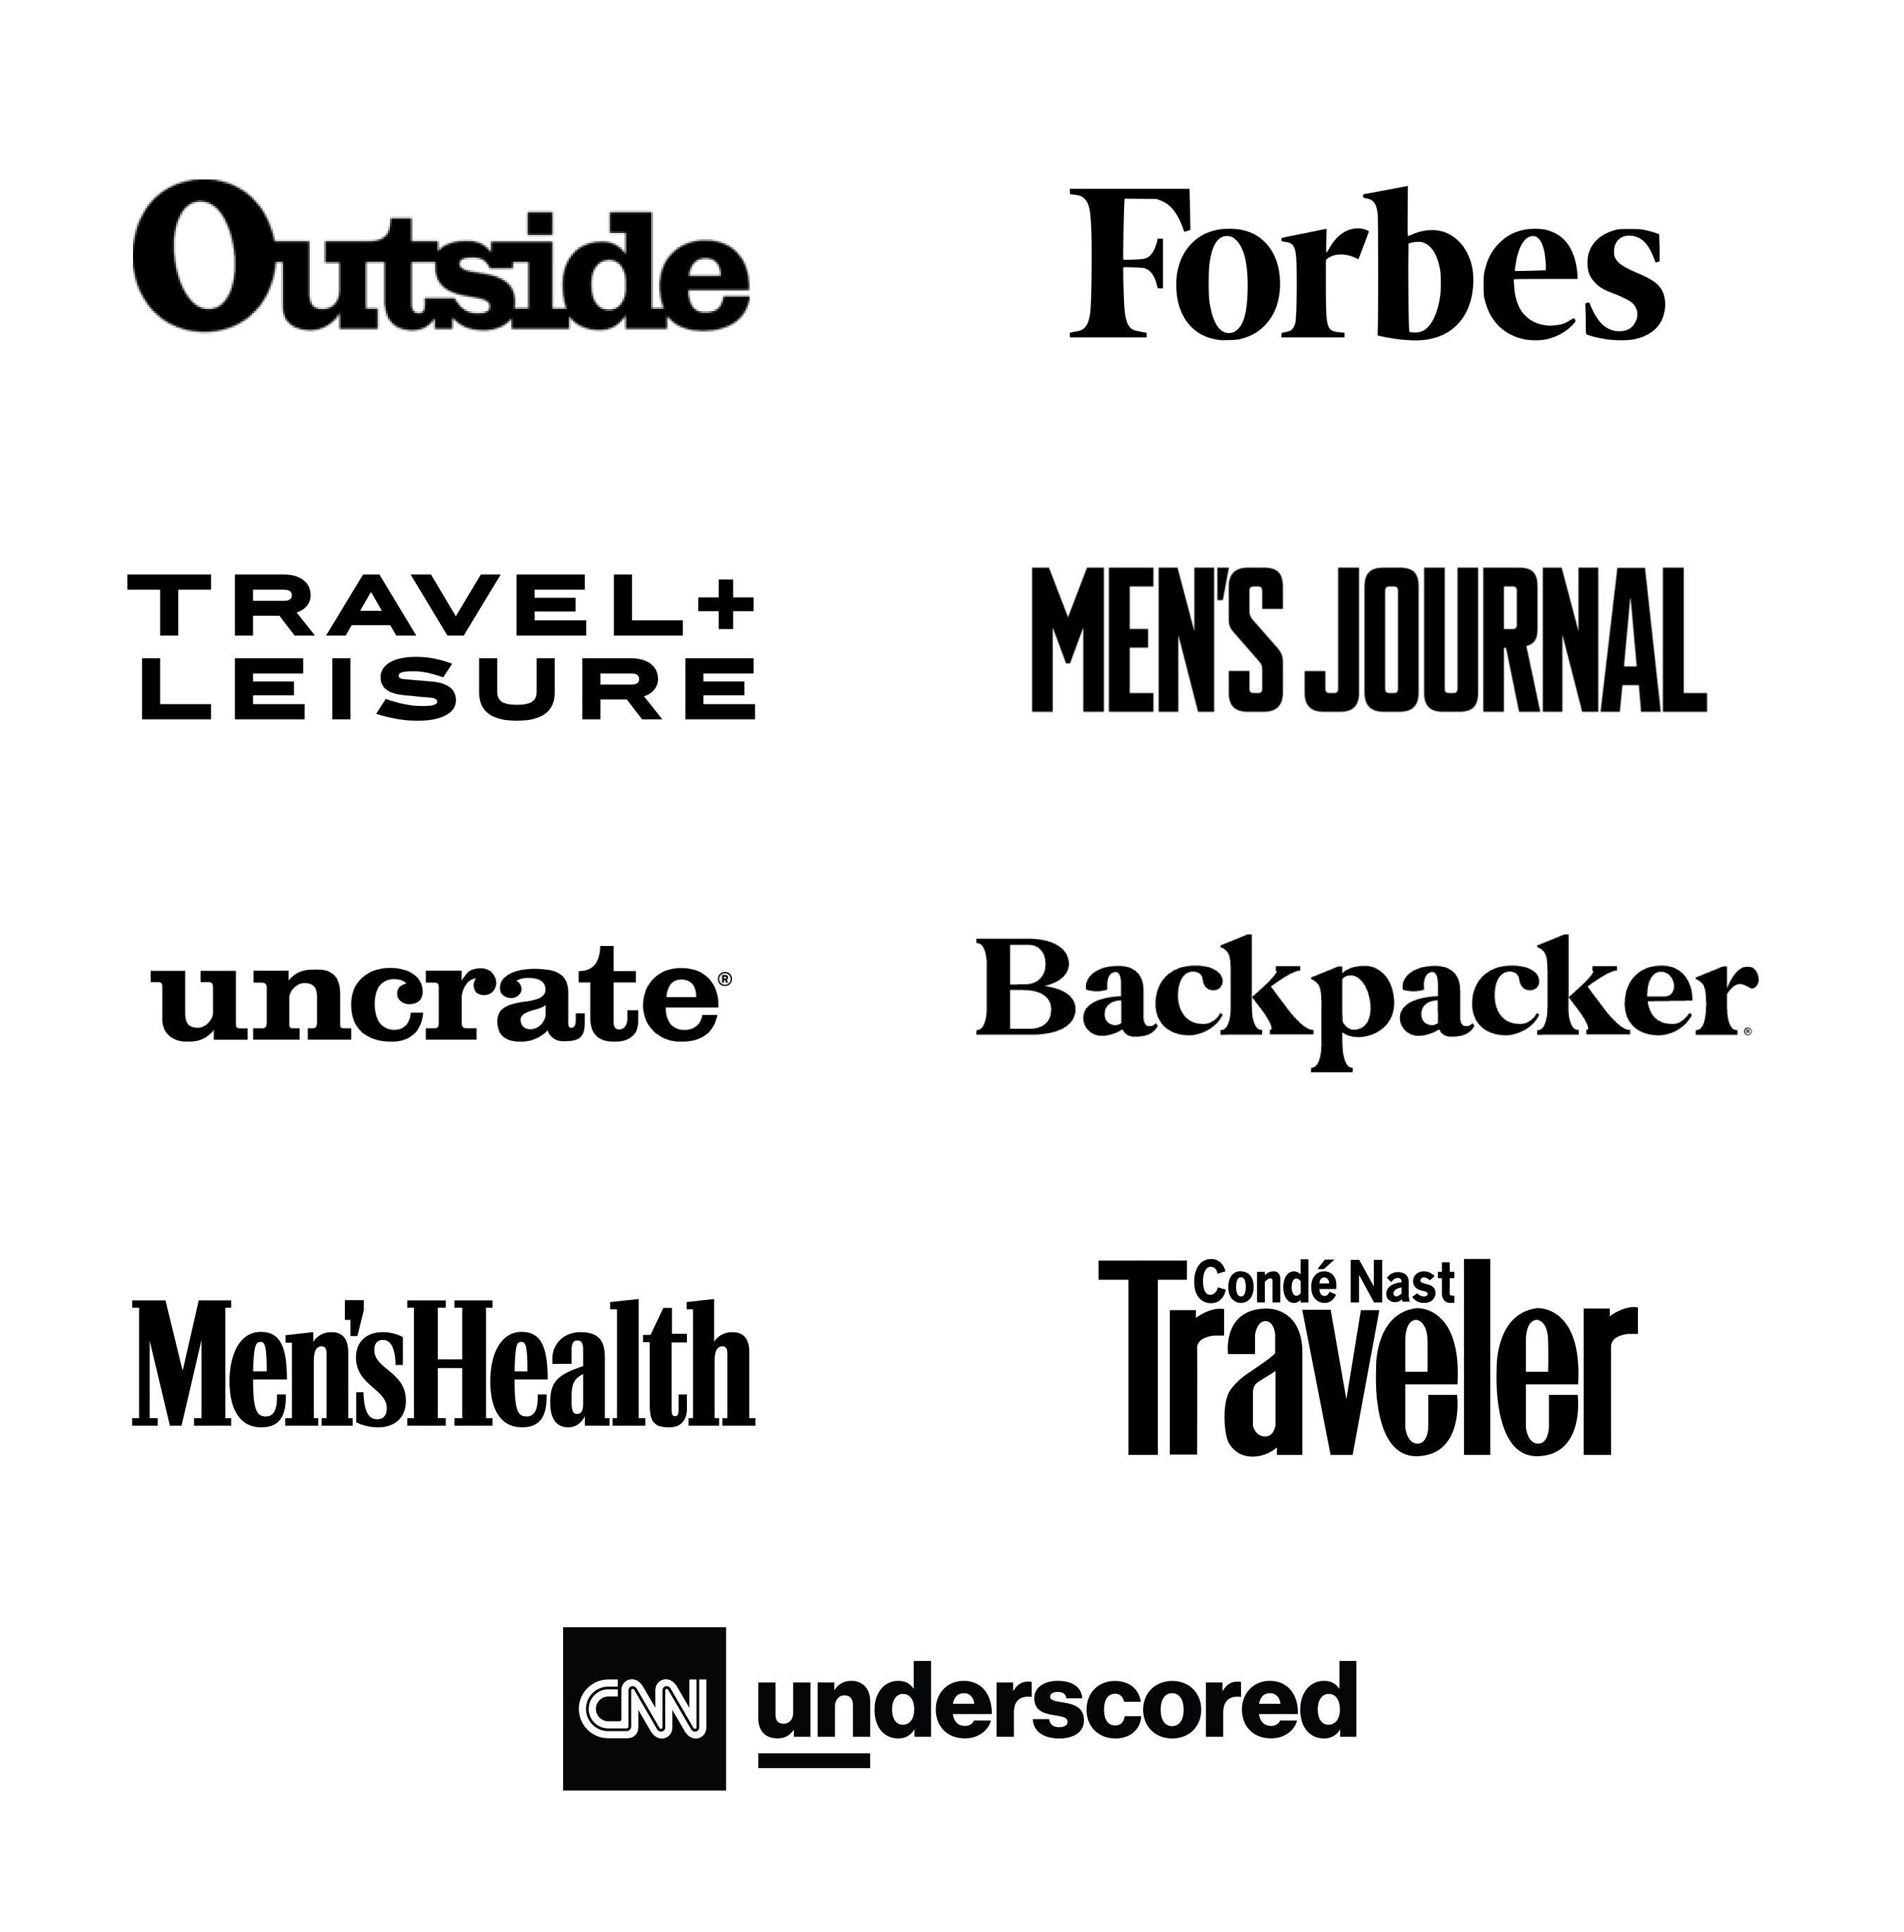 Outside Magazine, Forbes, Travel + Leisure, Men's Journal, uncrate, Backpaker, Men's Health, Conde Nast Travel, CNN underscored logos.